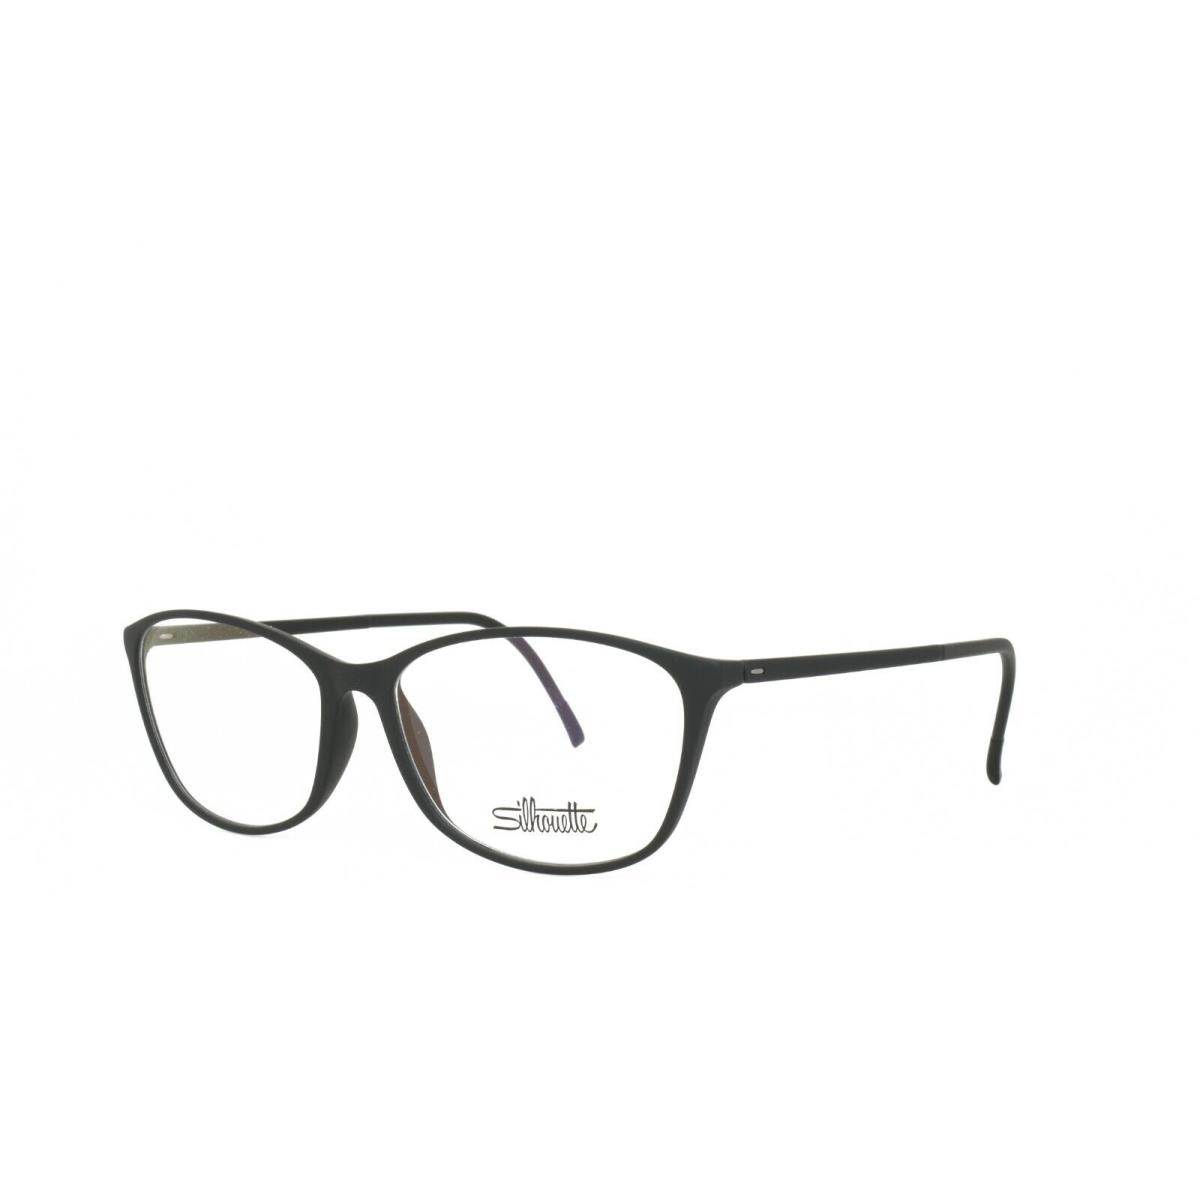 Silhouette Spx Illusion 1563 10 6100 Eyeglasses Frame 55-15-135 Black